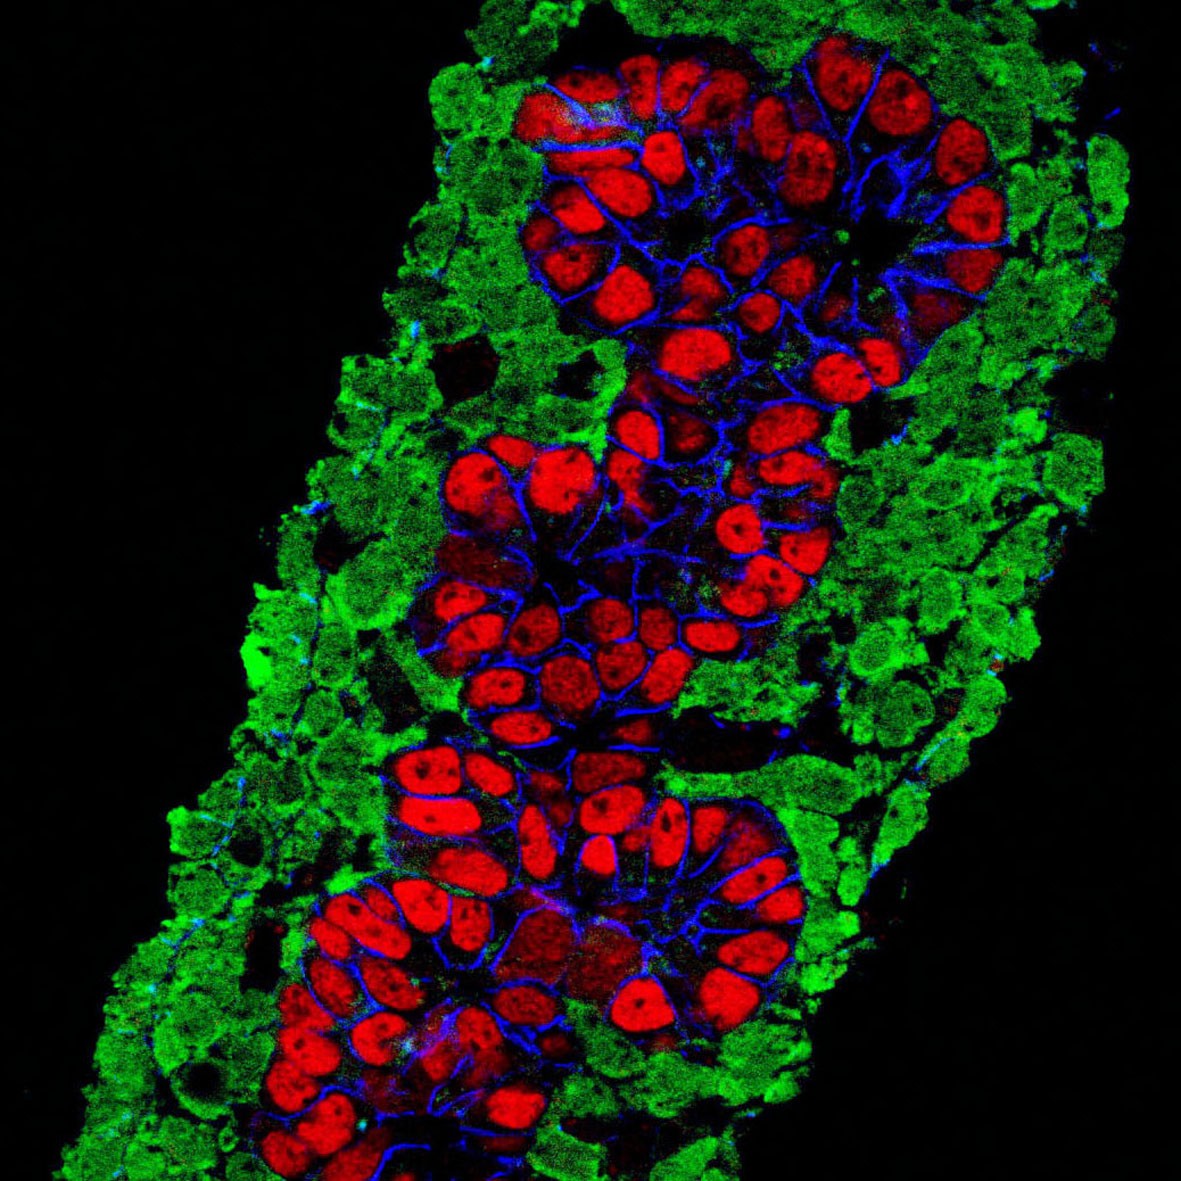 <font color="red">高血糖</font>会导致每个β细胞每秒泄漏10万个ATP分子，胰岛细胞就是这样被活活饿死的